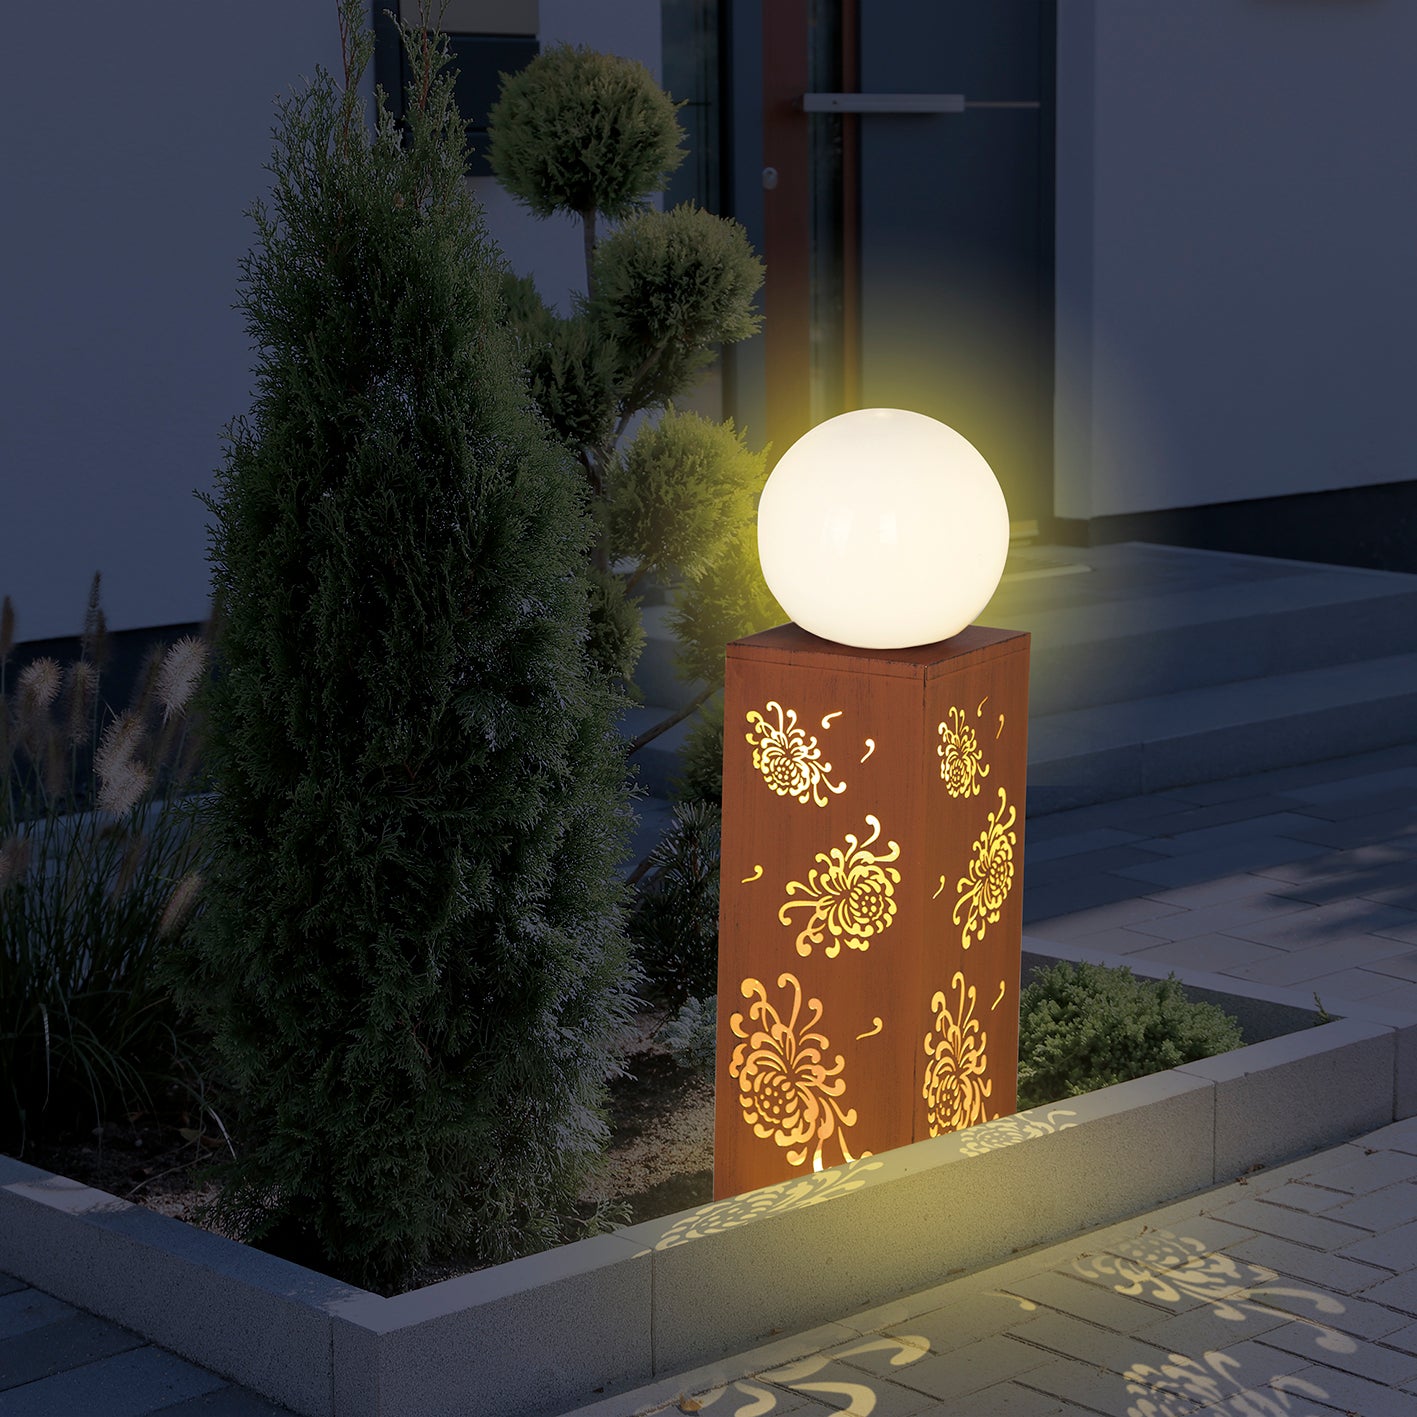 LED-Dekosäule "Bauernrose" inkl. Leuchtkugel - 65 cm - Rost-Optik